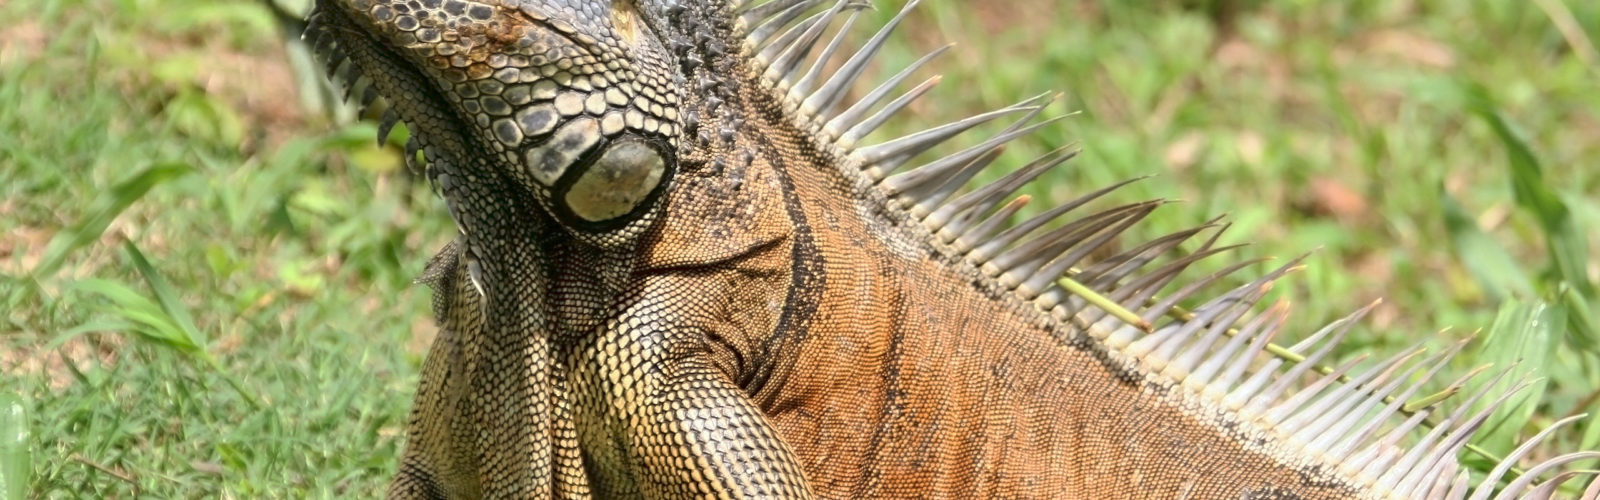 belize-iguana